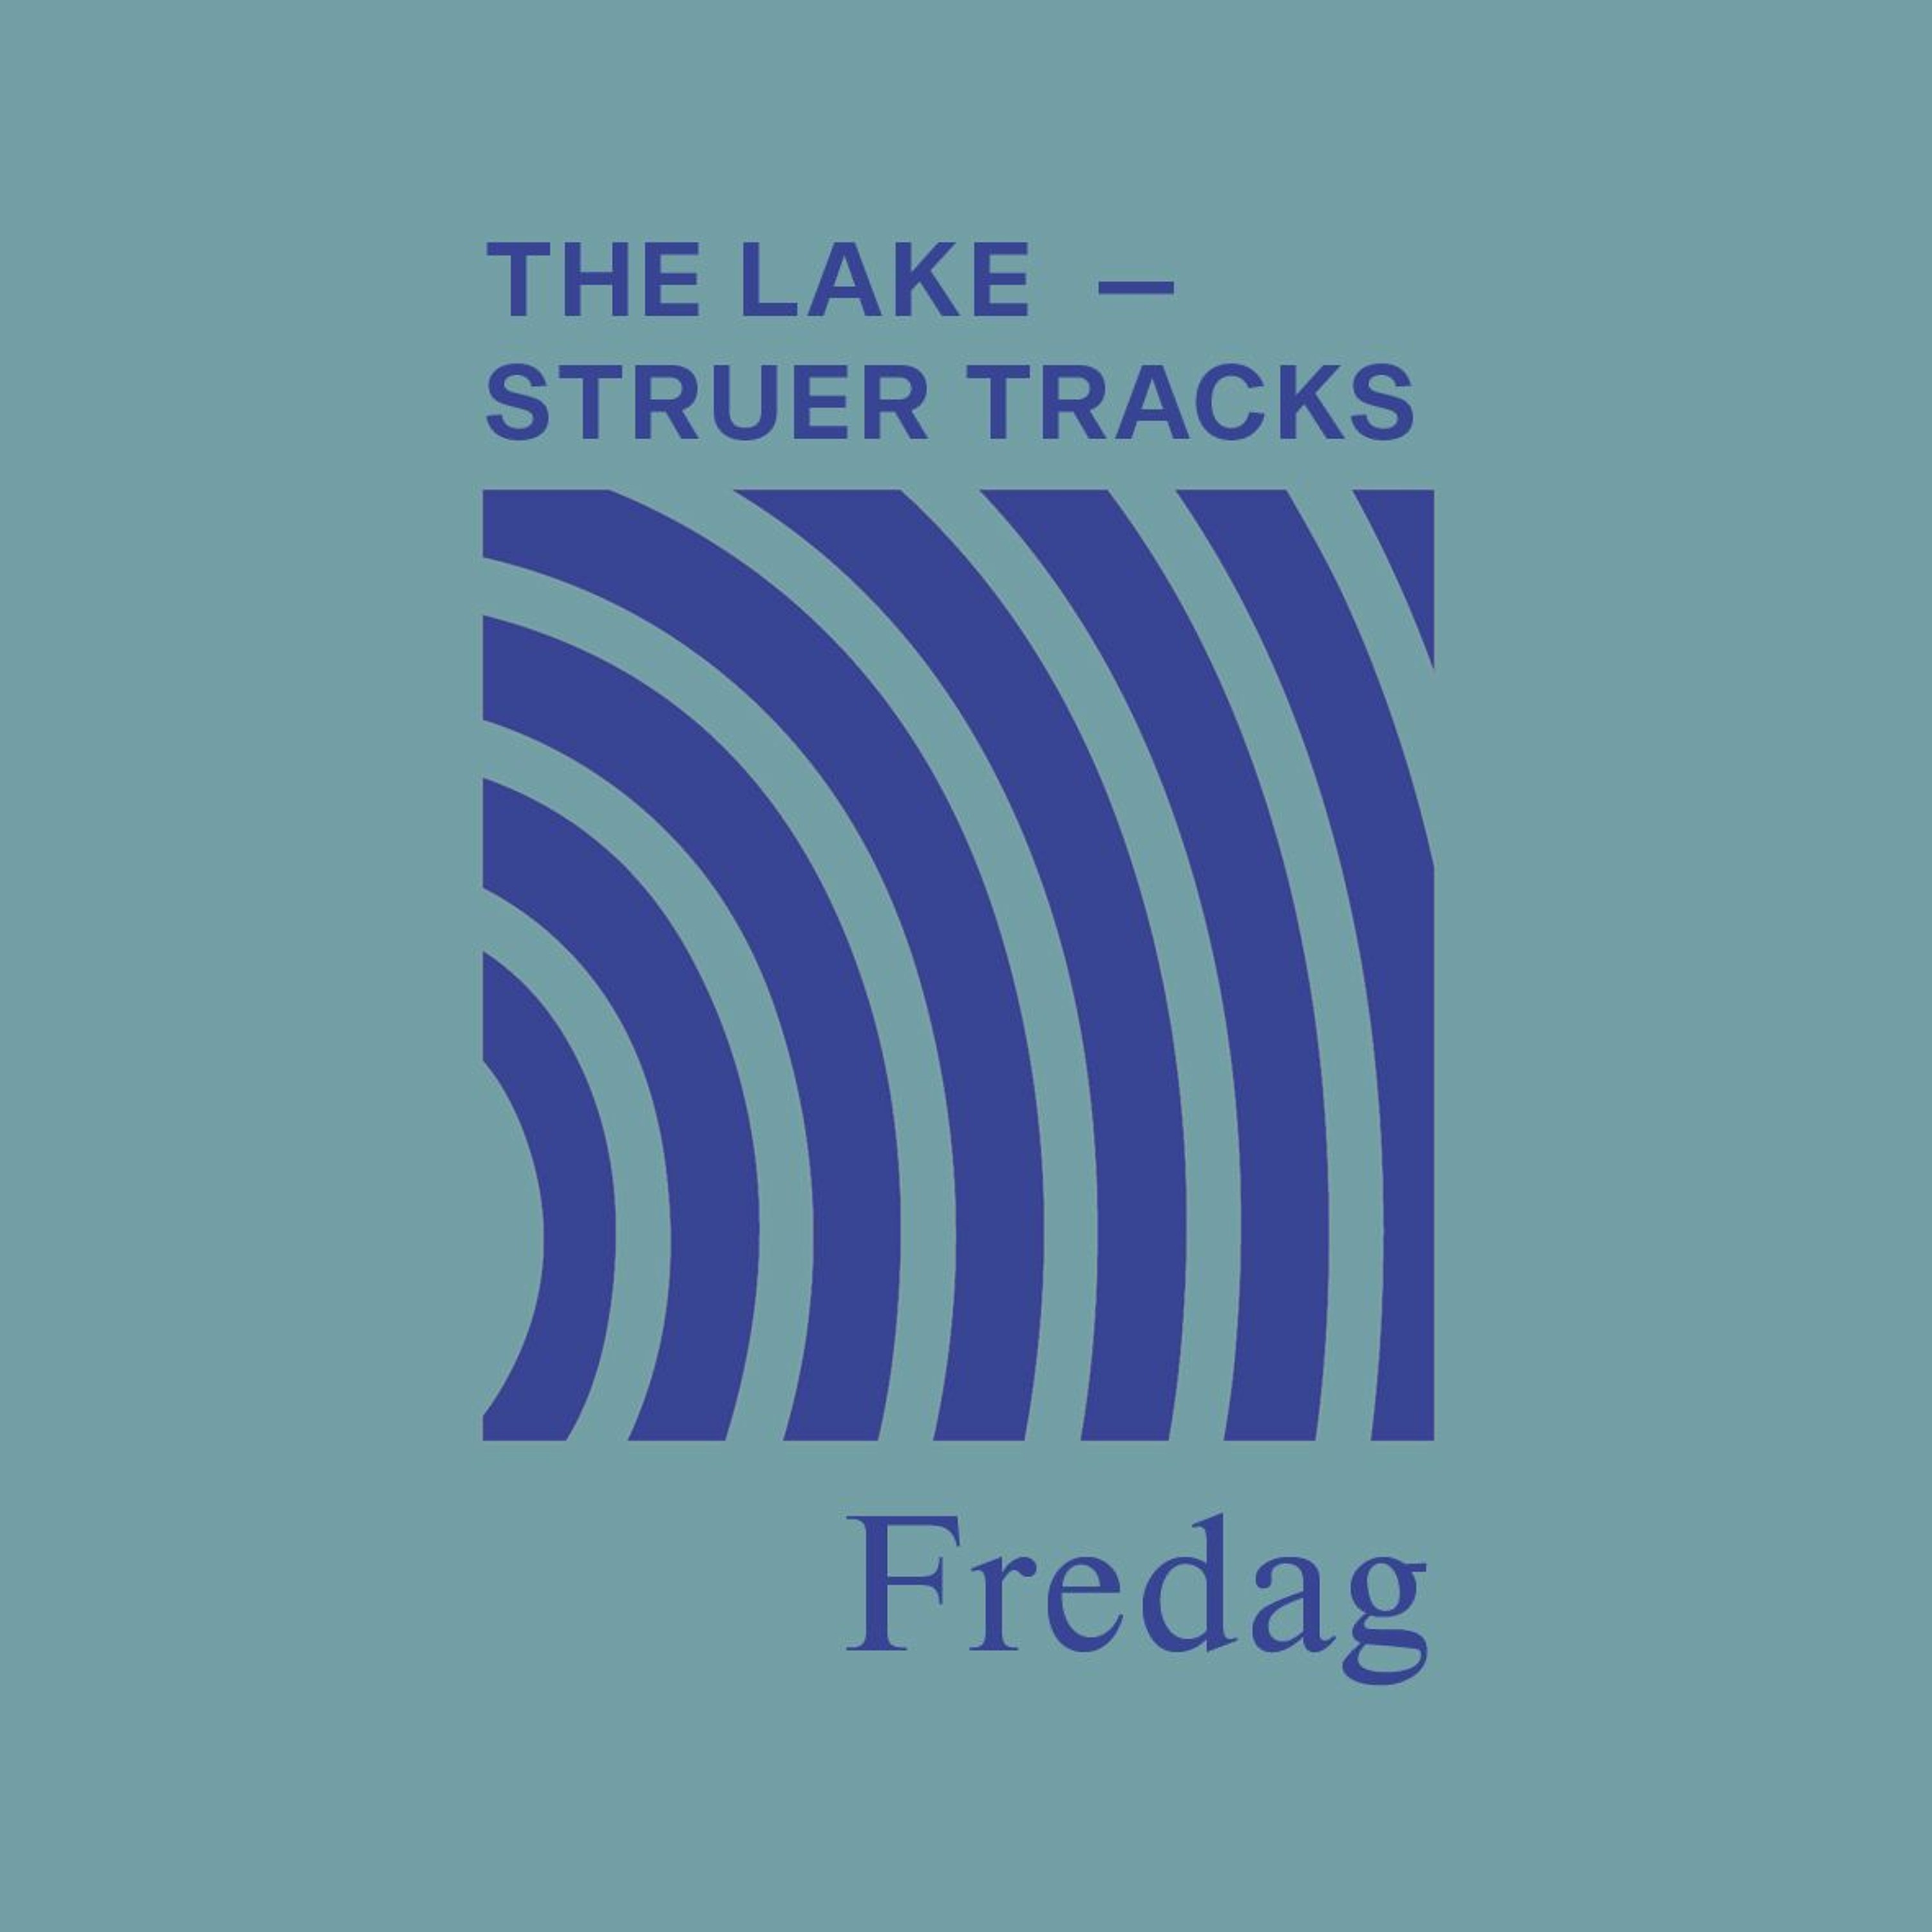 The Lake ⏤ Struer Tracks: Fredag